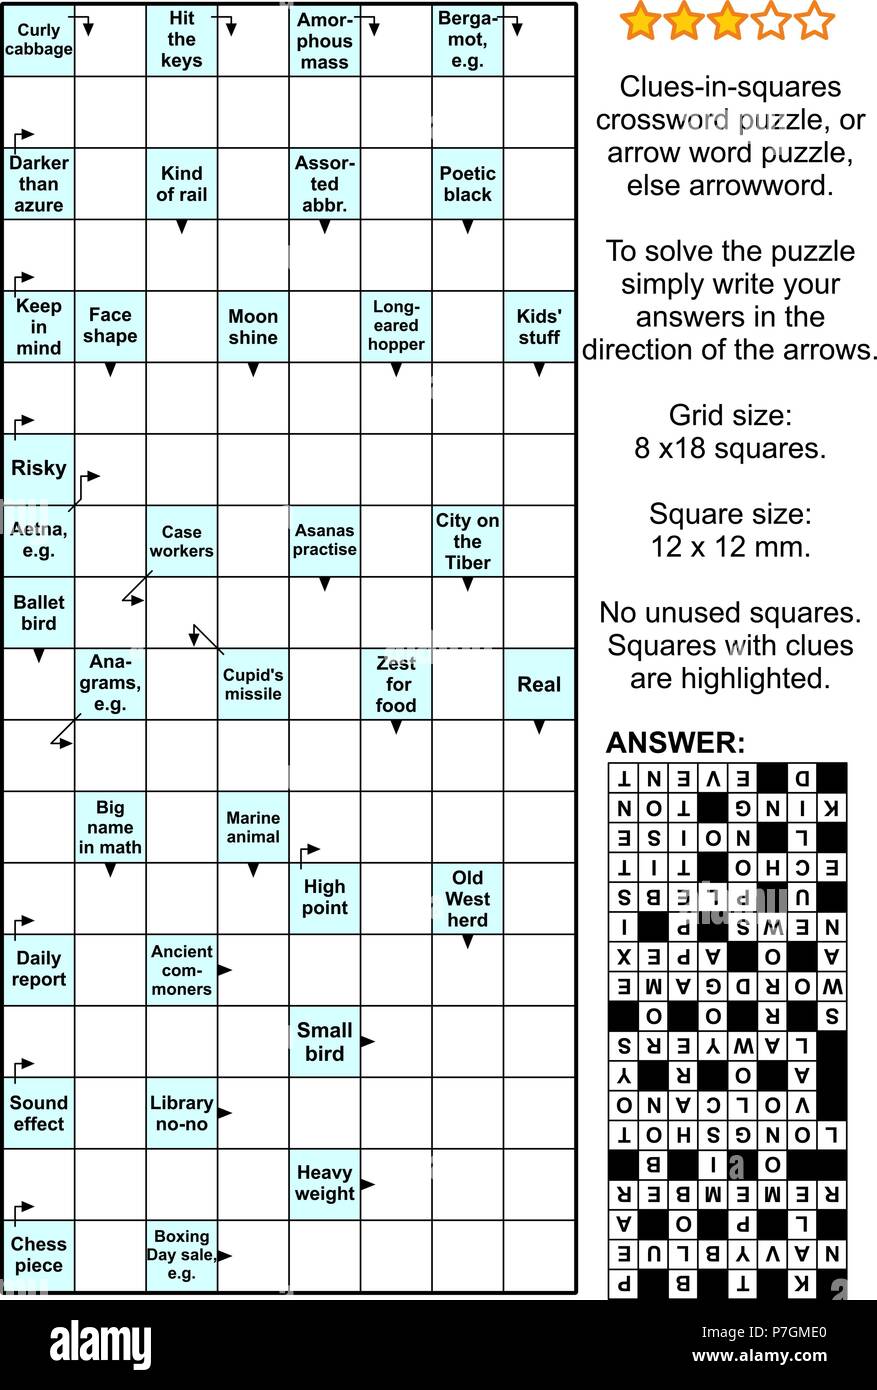 clues-in-squares-crossword-puzzle-or-arrow-word-puzzle-else-arrowword